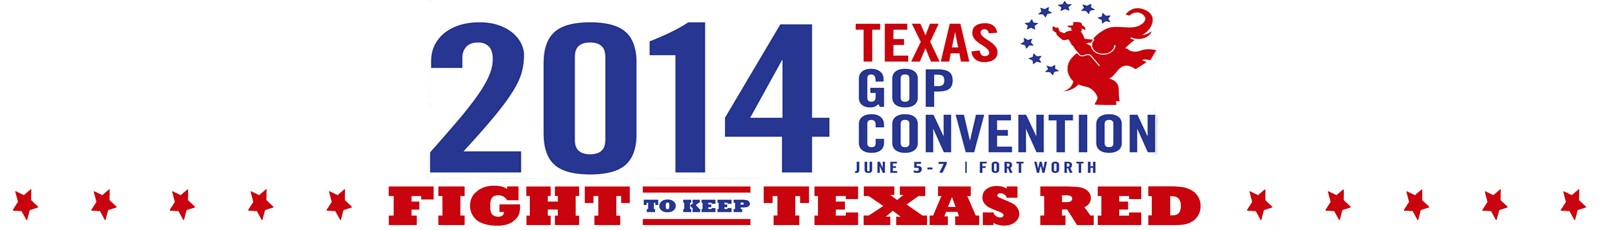 Bonehead Quote of the Week: Texas GOP Platform Edition